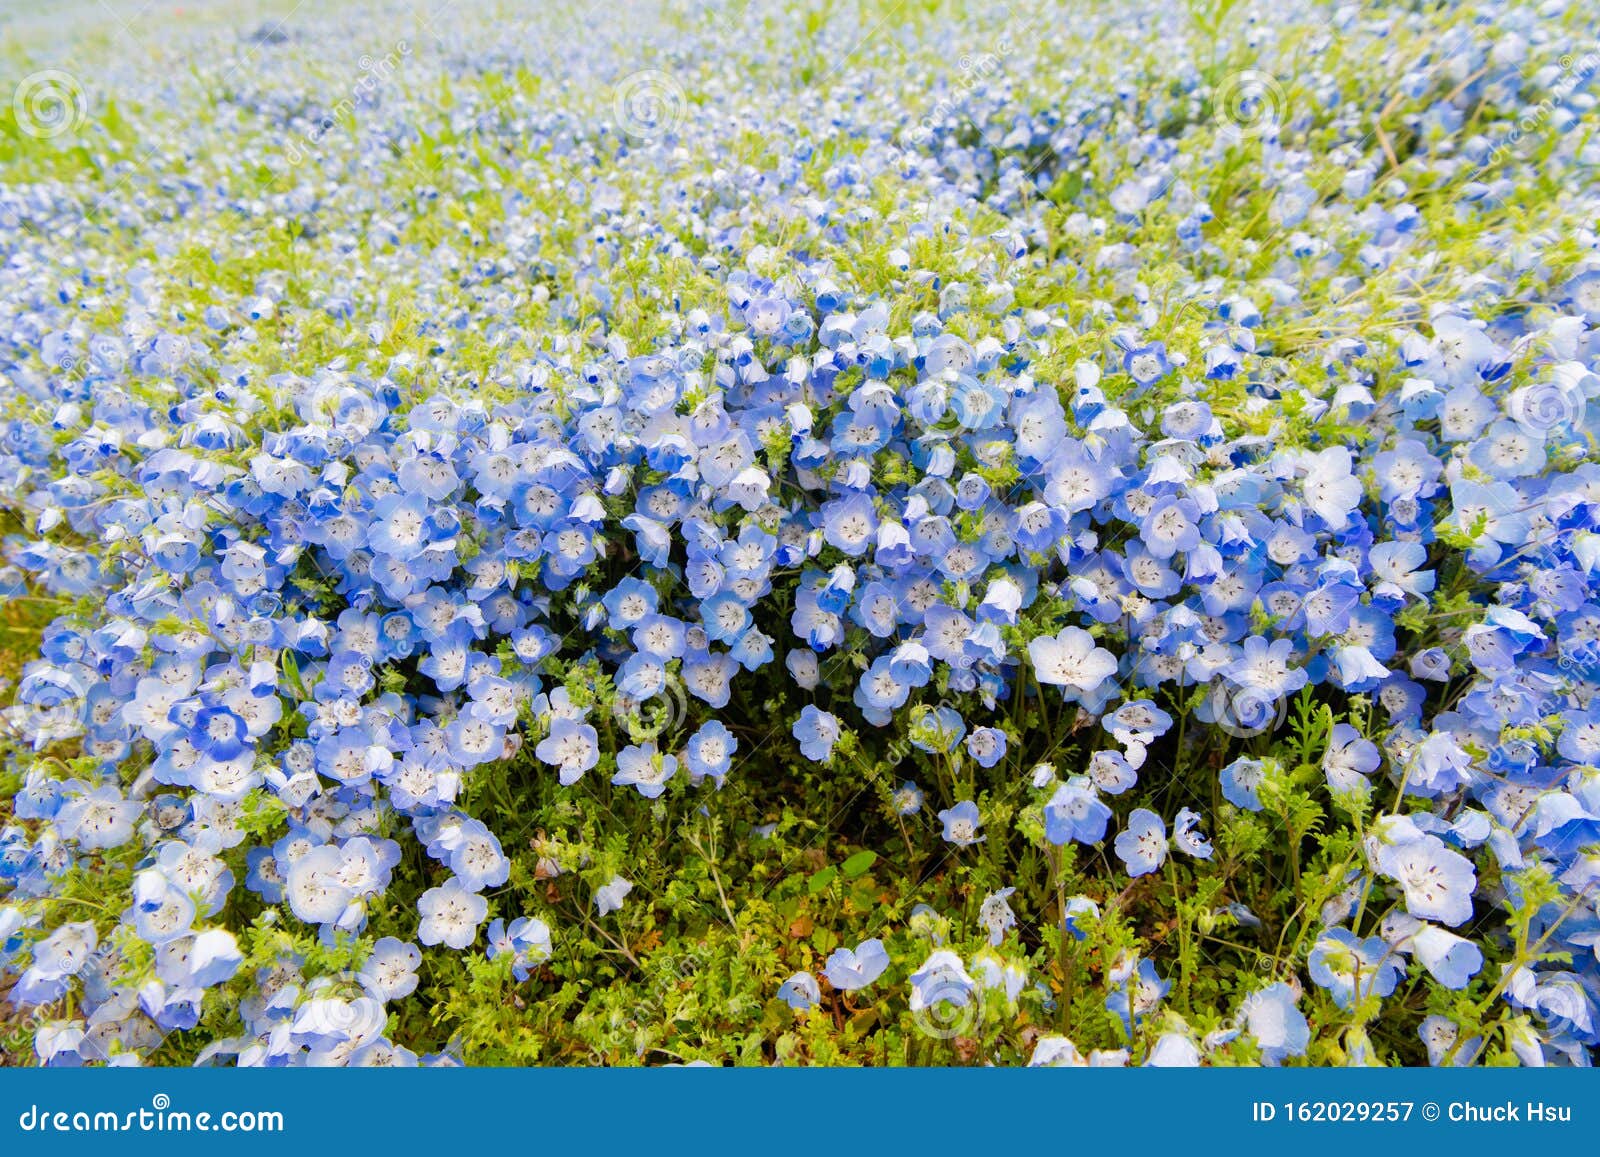 Nemophila Menziesii Baby Blue Eyed Flower Flower Field Stock Image Image Of Ibaraki Herb